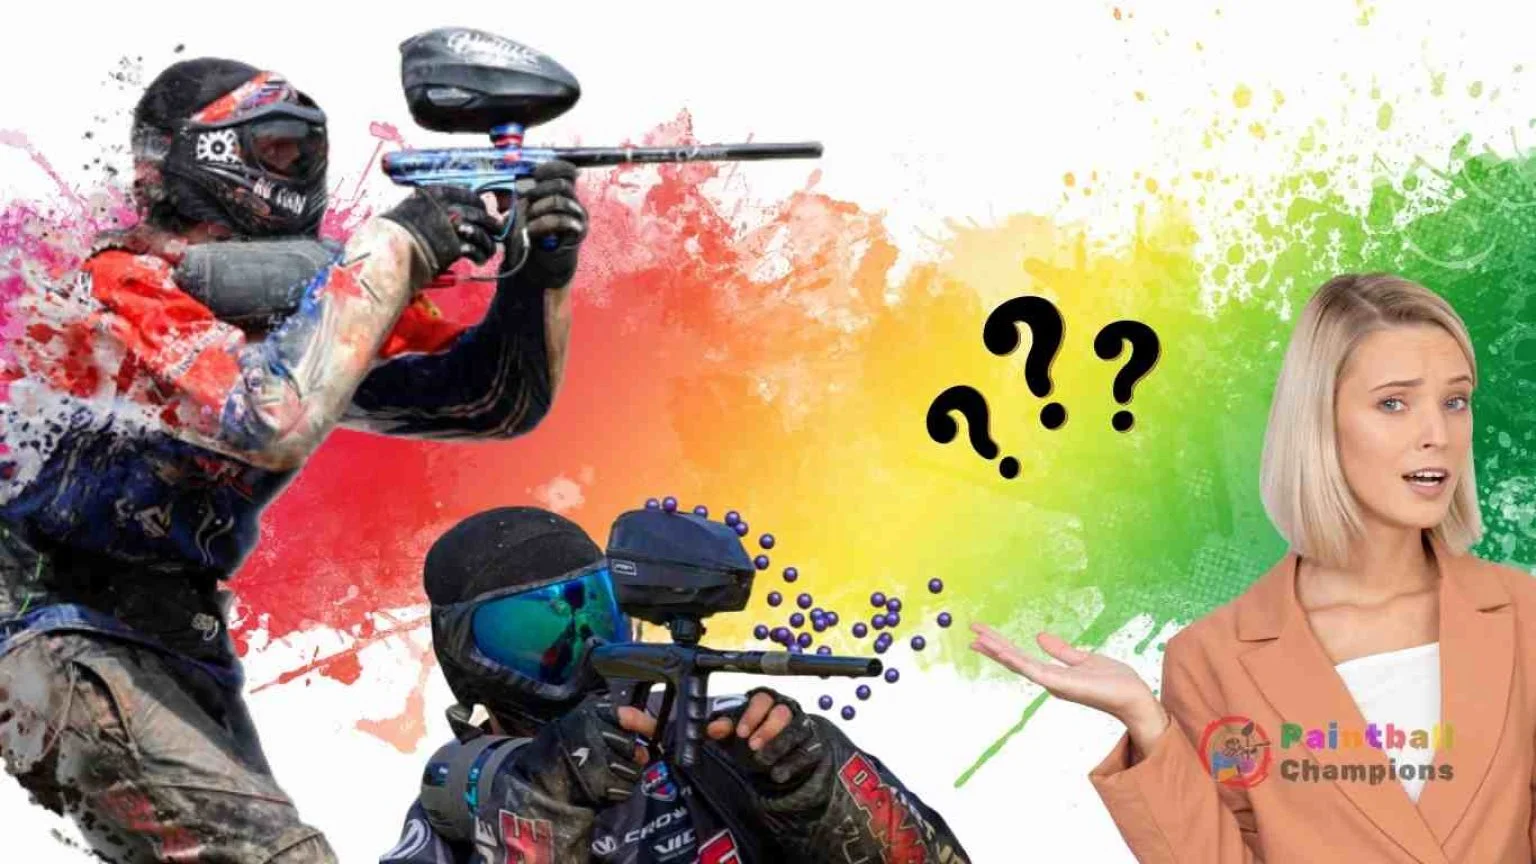 How Far Can A Paintball Gun Shoot